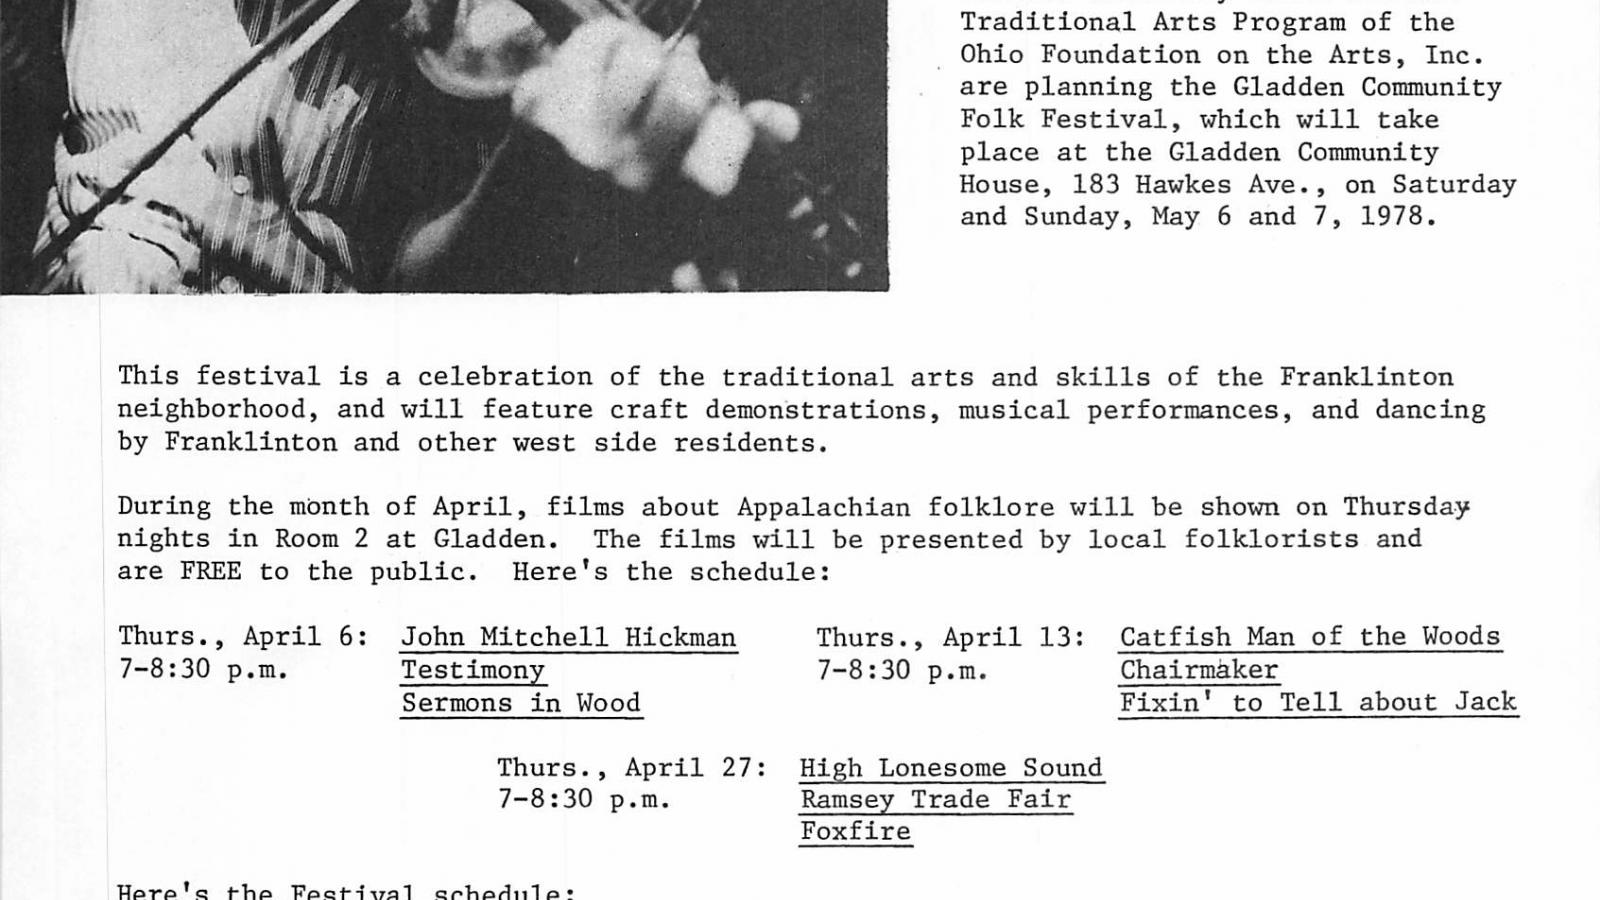 Flyer for Gladden Community Folk Festival in Columbus, May 5-6, 1978